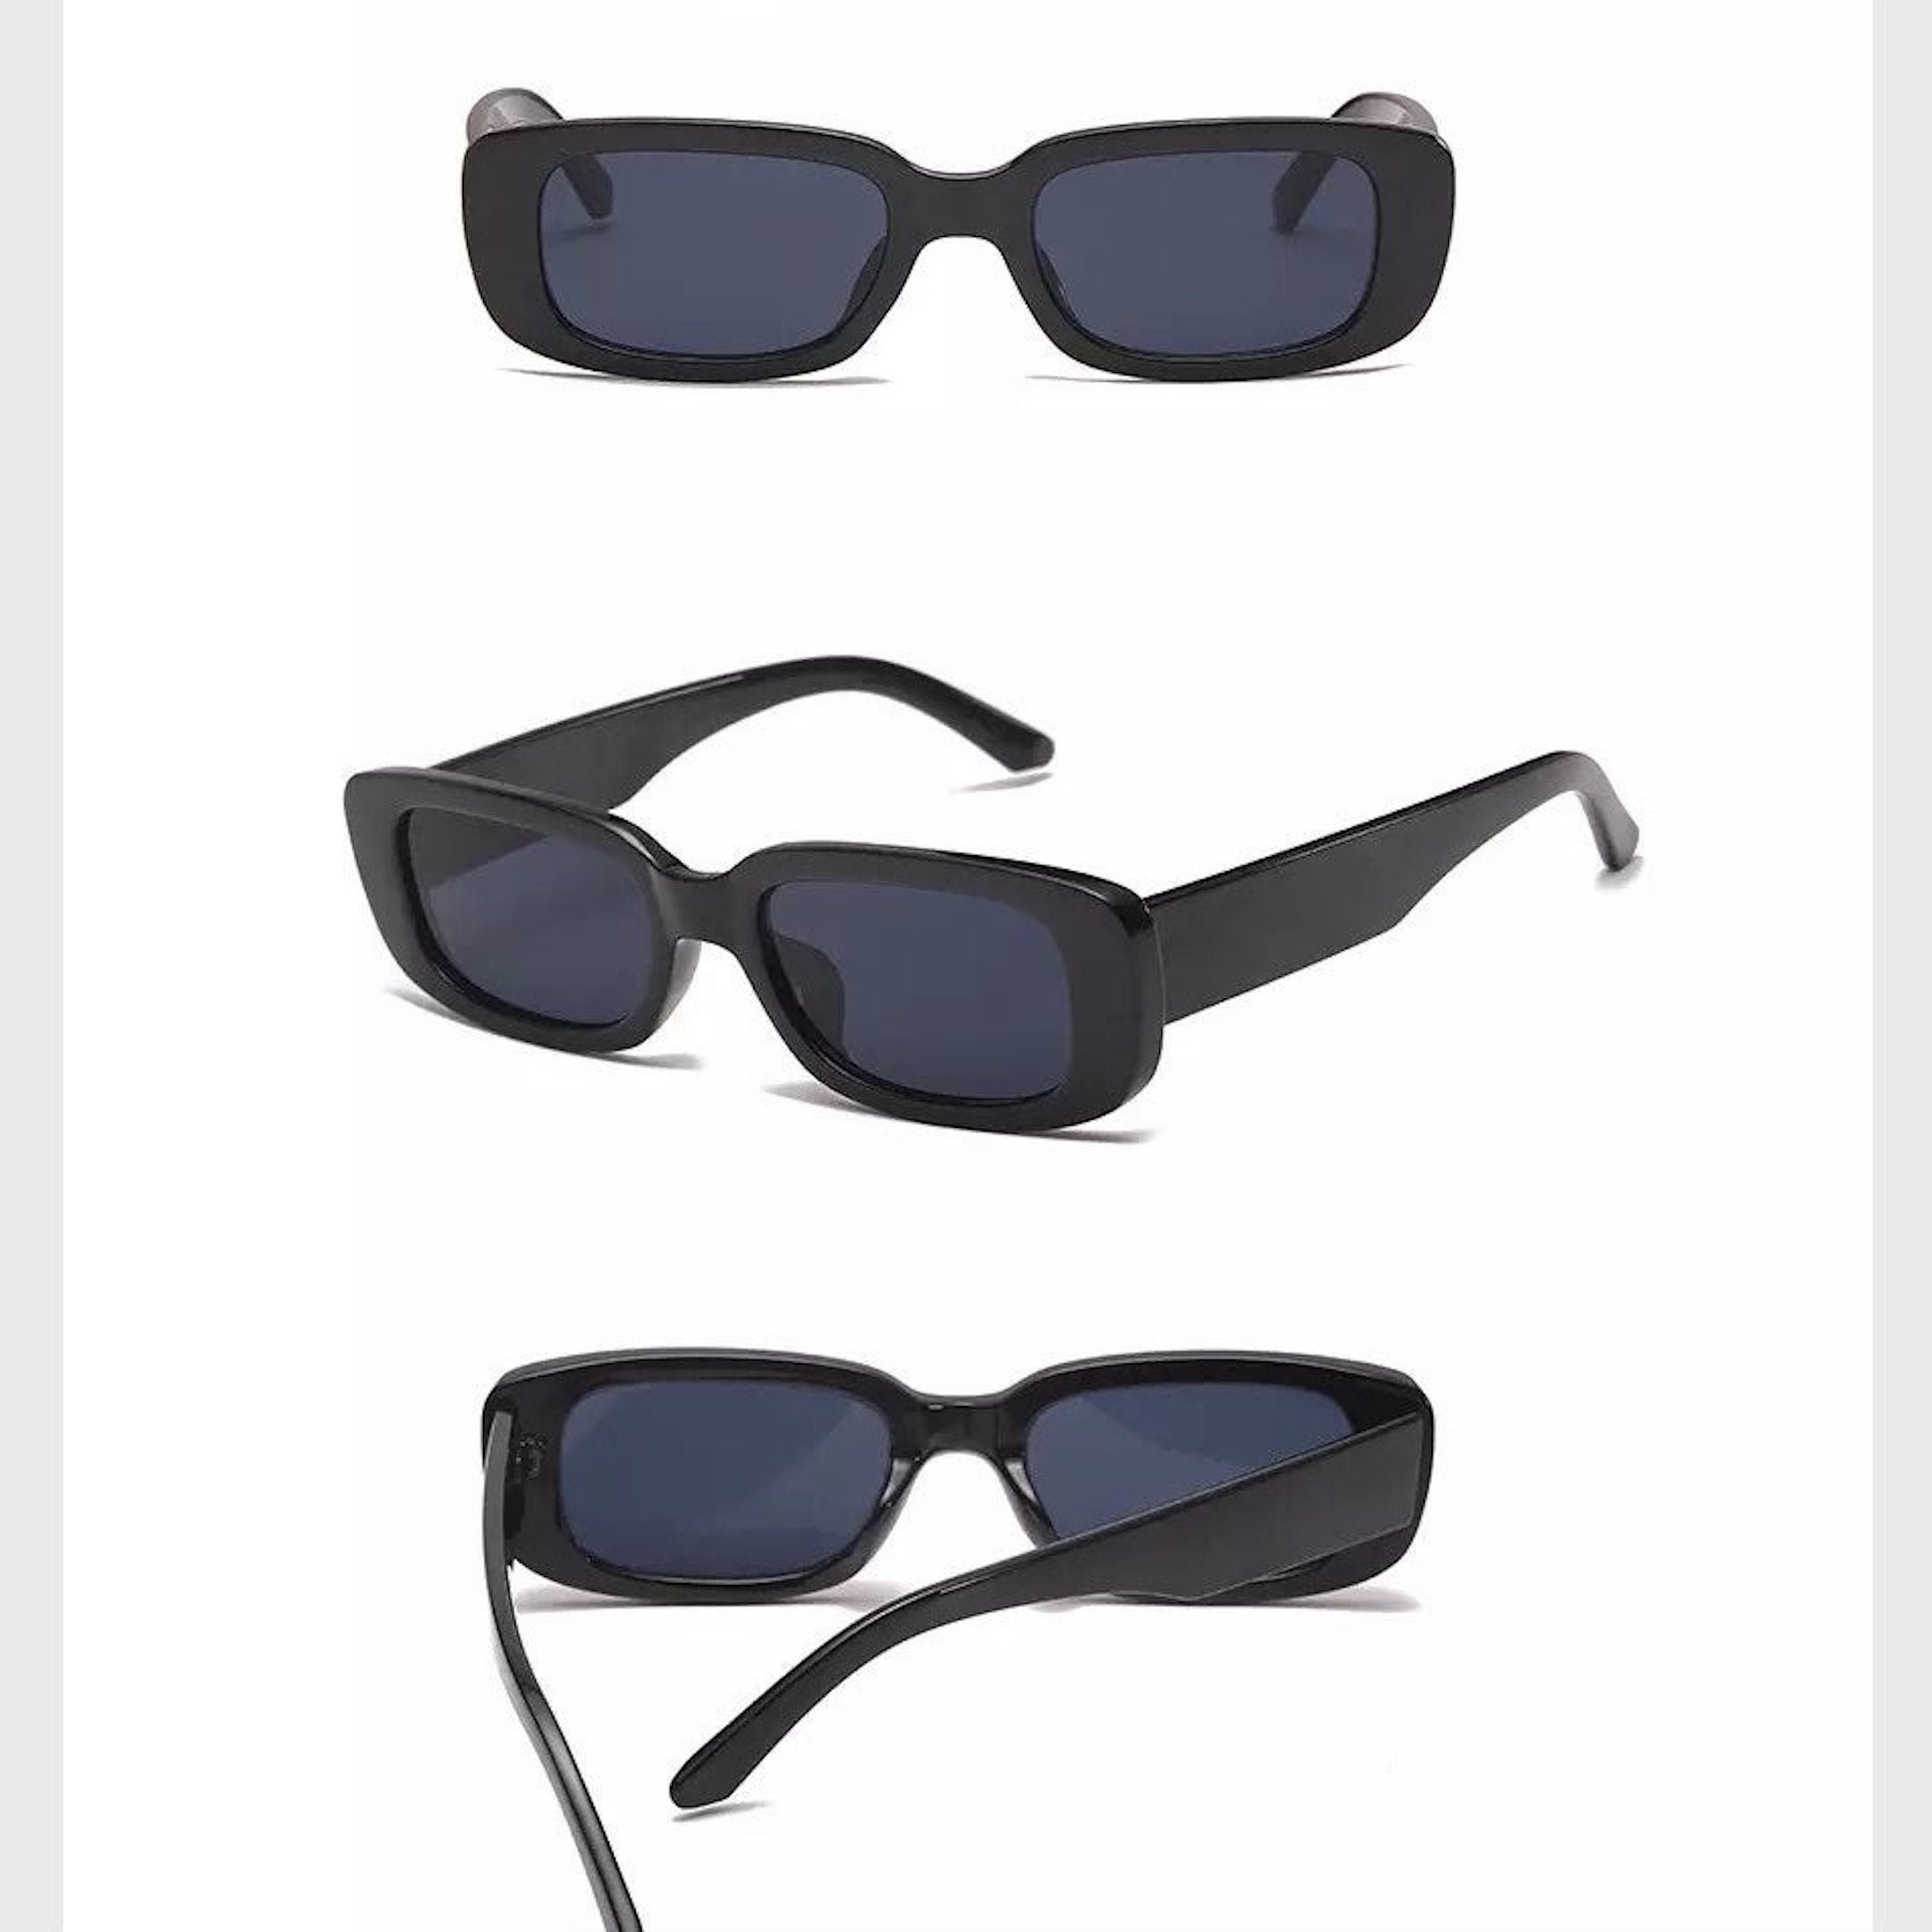 Black rectangular oval thin Sunglasses | Etsy